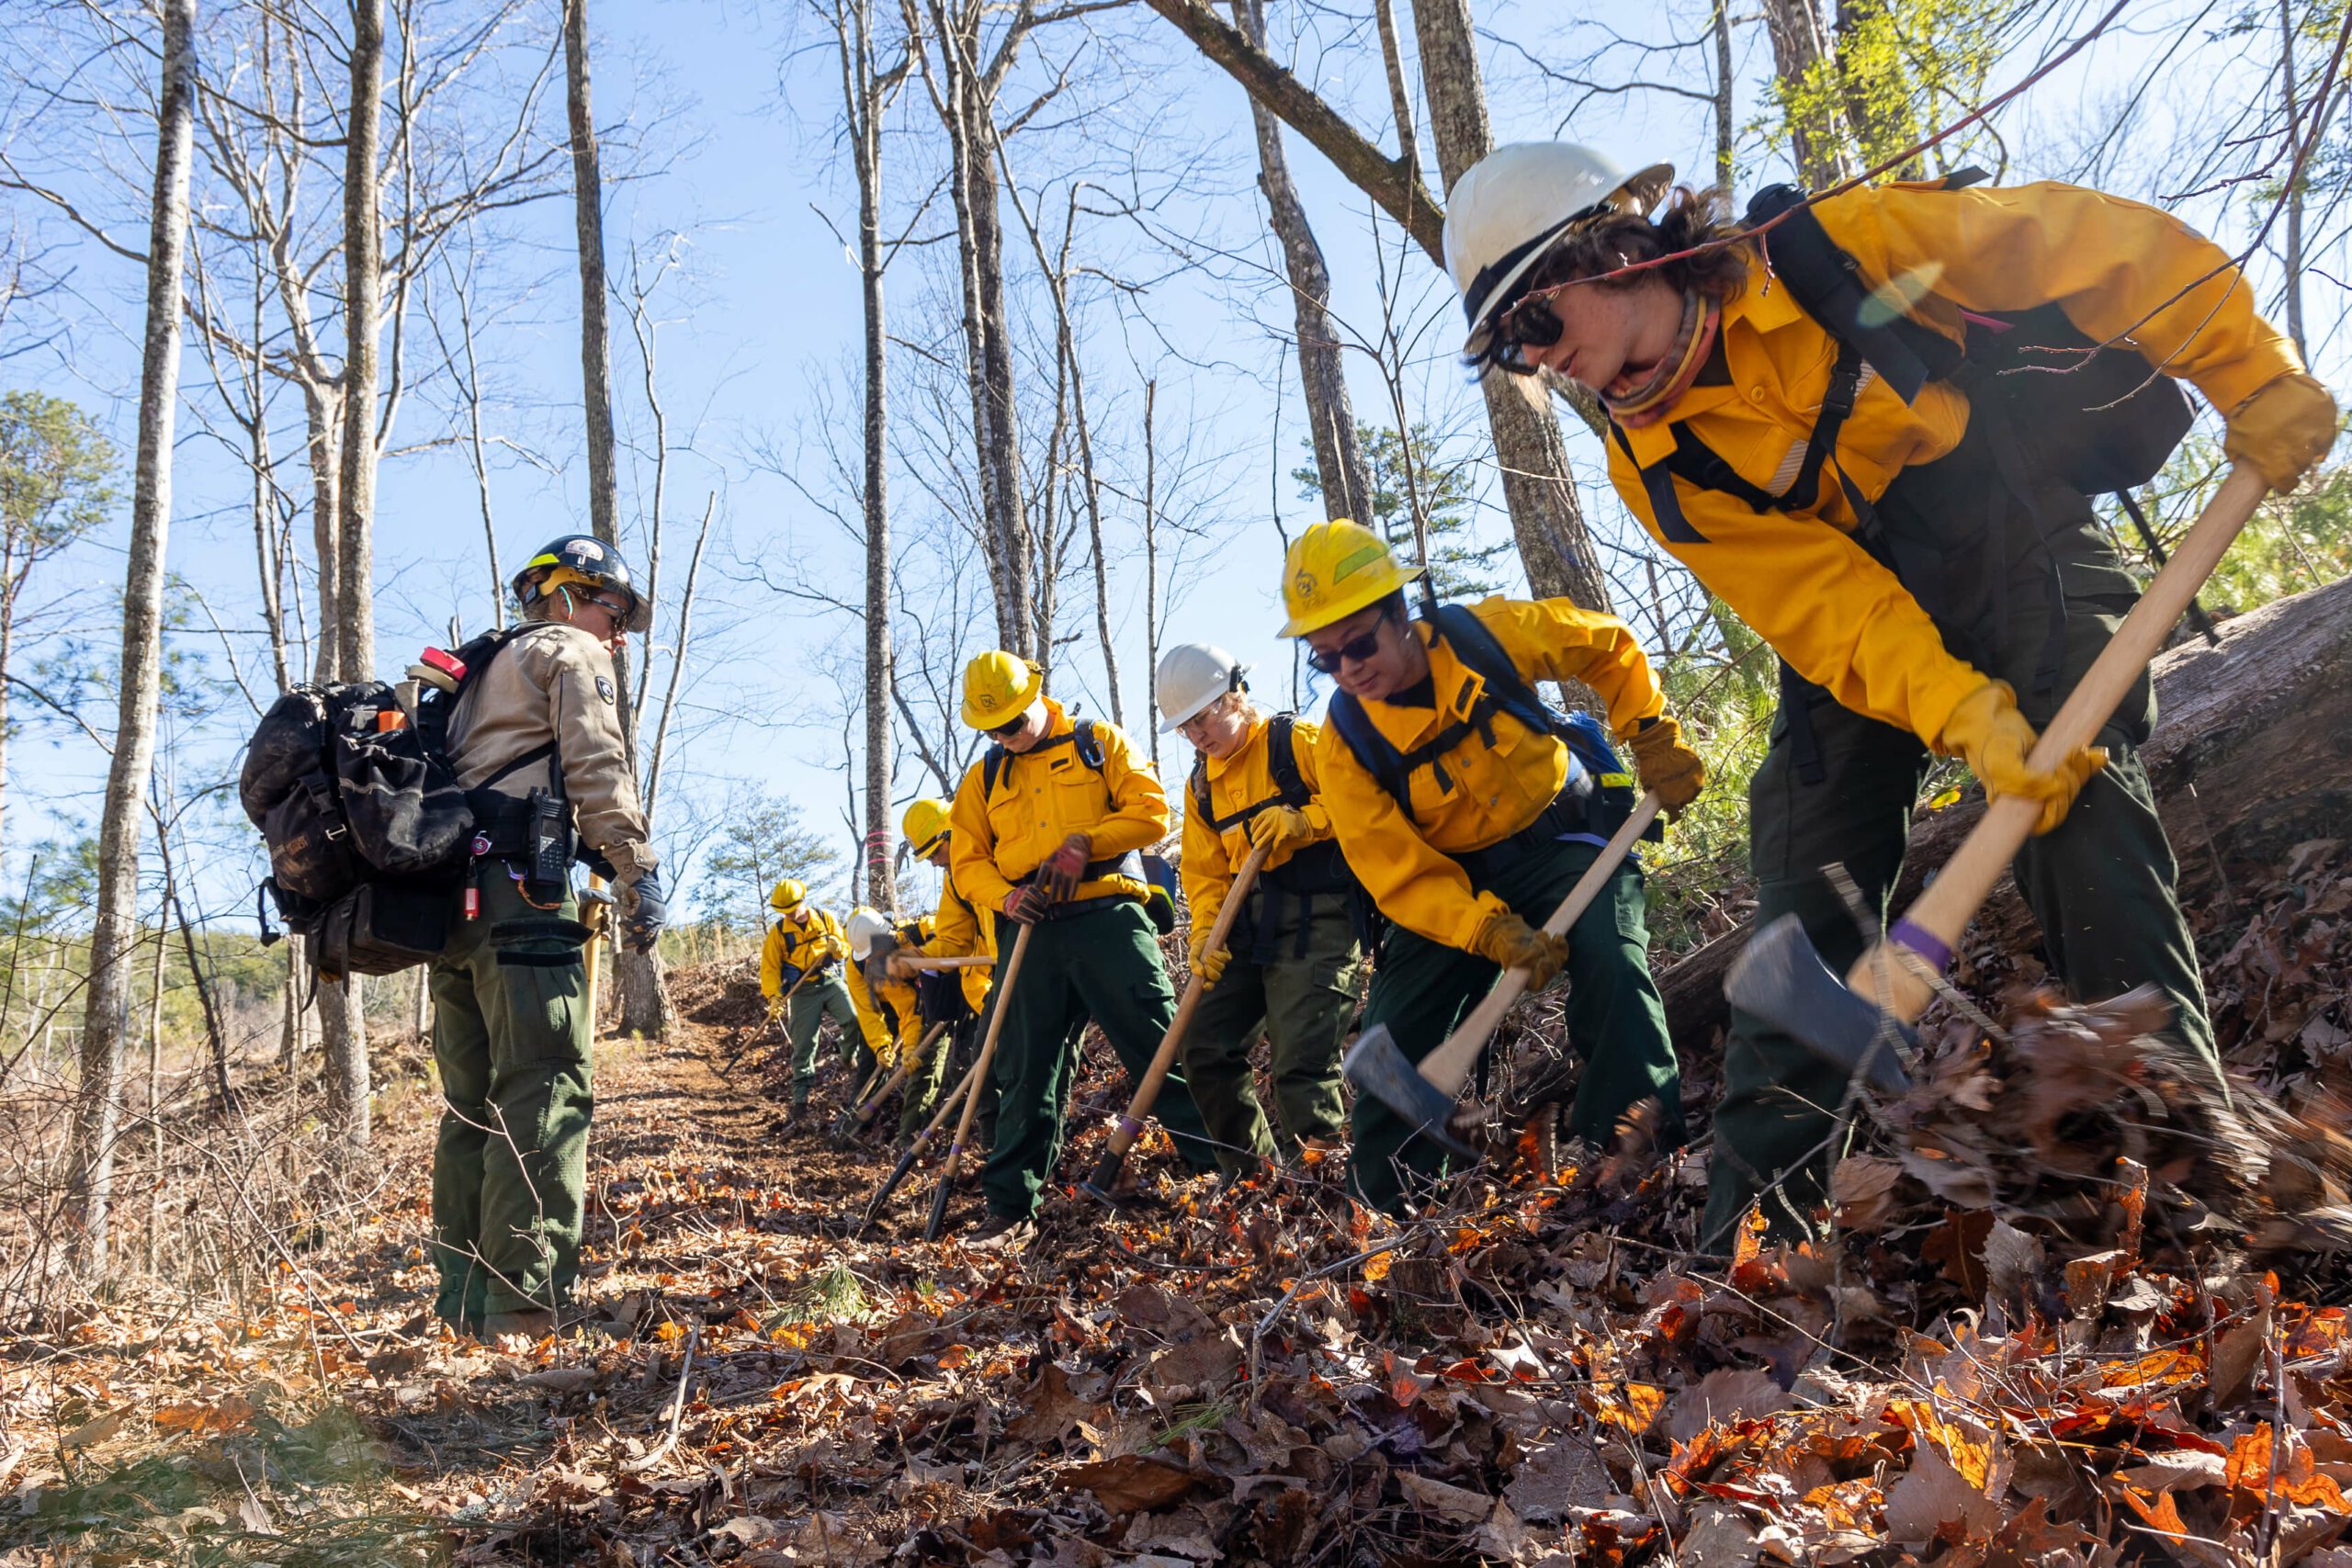 Student Conservation Association, U.S. Forest Service Announce Wildland Fire Academy Program